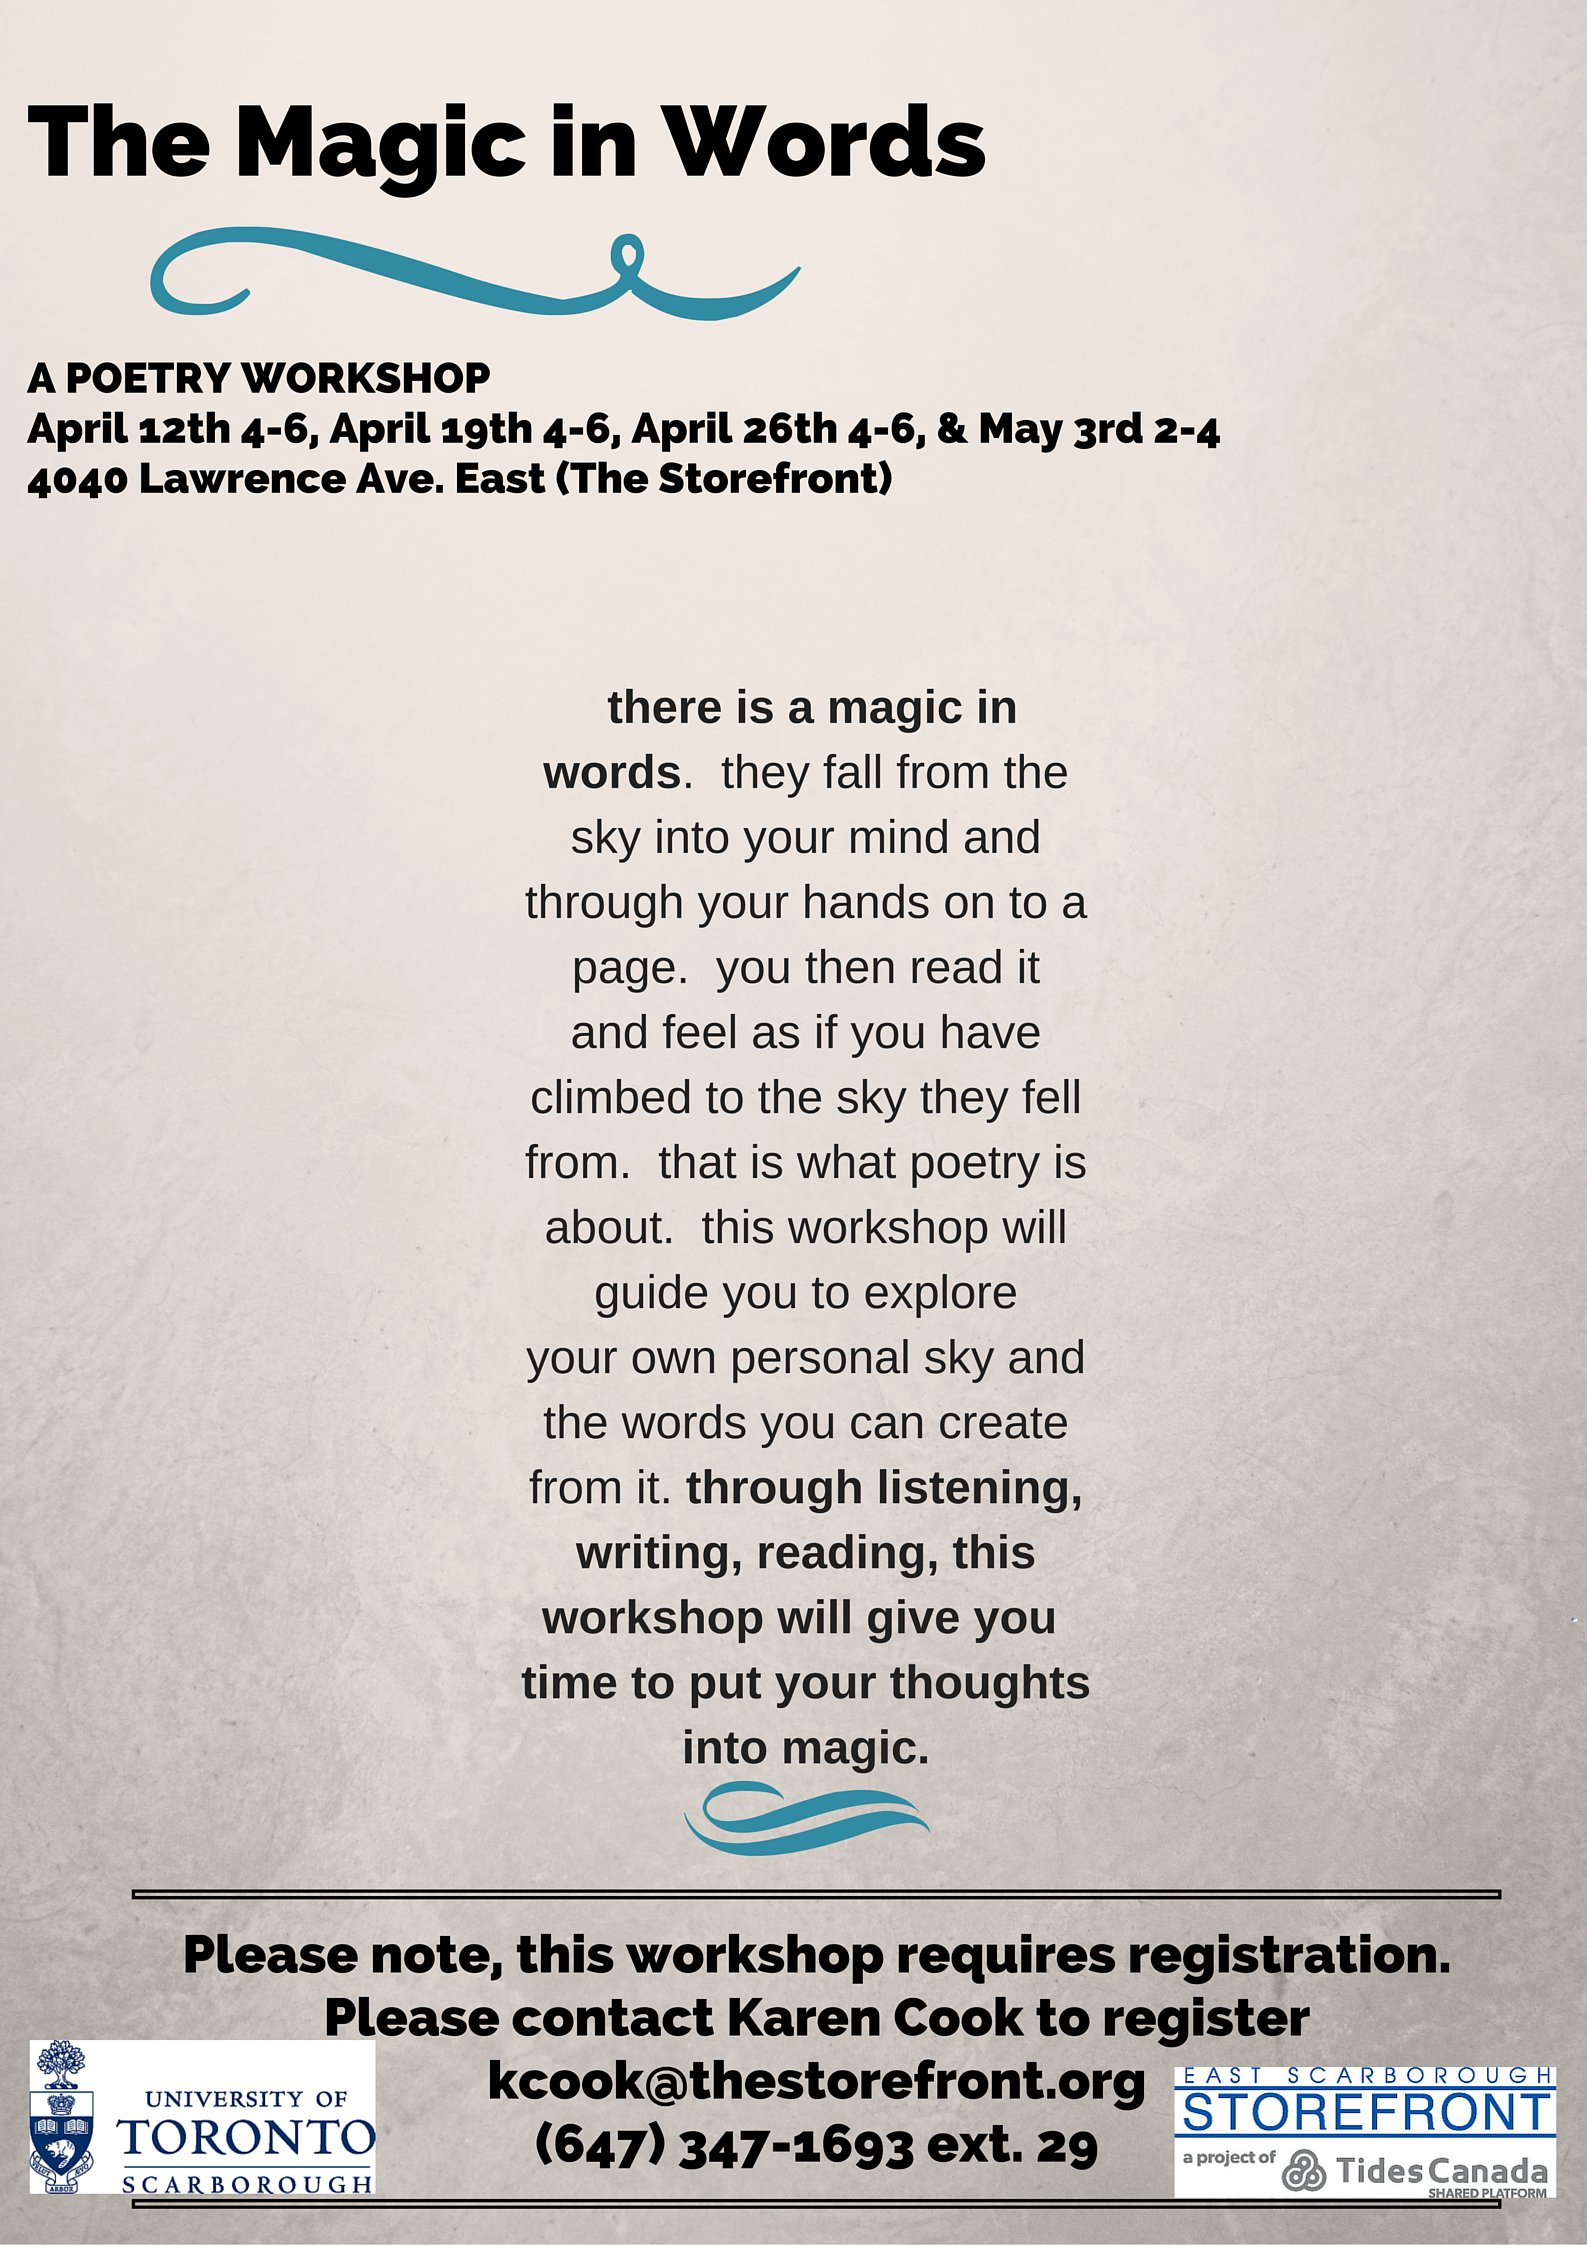 udføre Vise dig Forbavselse The Storefront on Twitter: "Roses are red, violets are blue, we have an  original poetry workshop for you! See flyer for details.  https://t.co/sCYhRa8Lbd" / Twitter